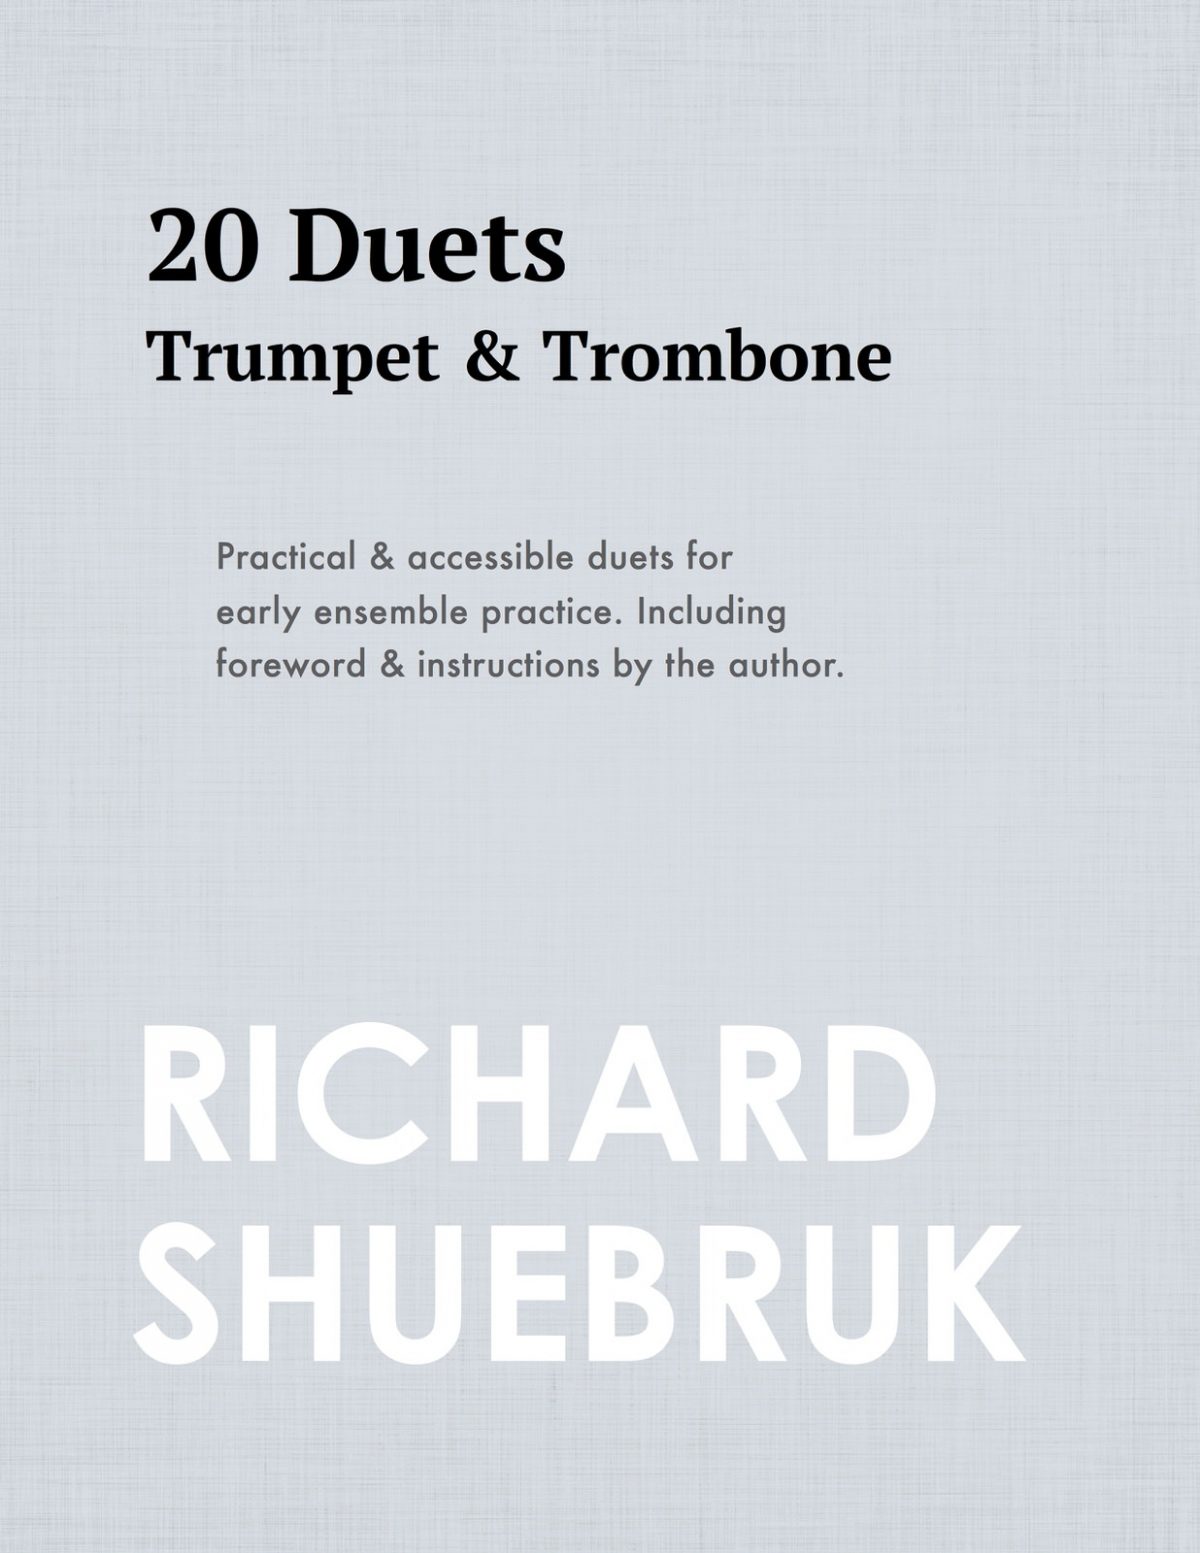 20 Duets for Trumpet & Trombone